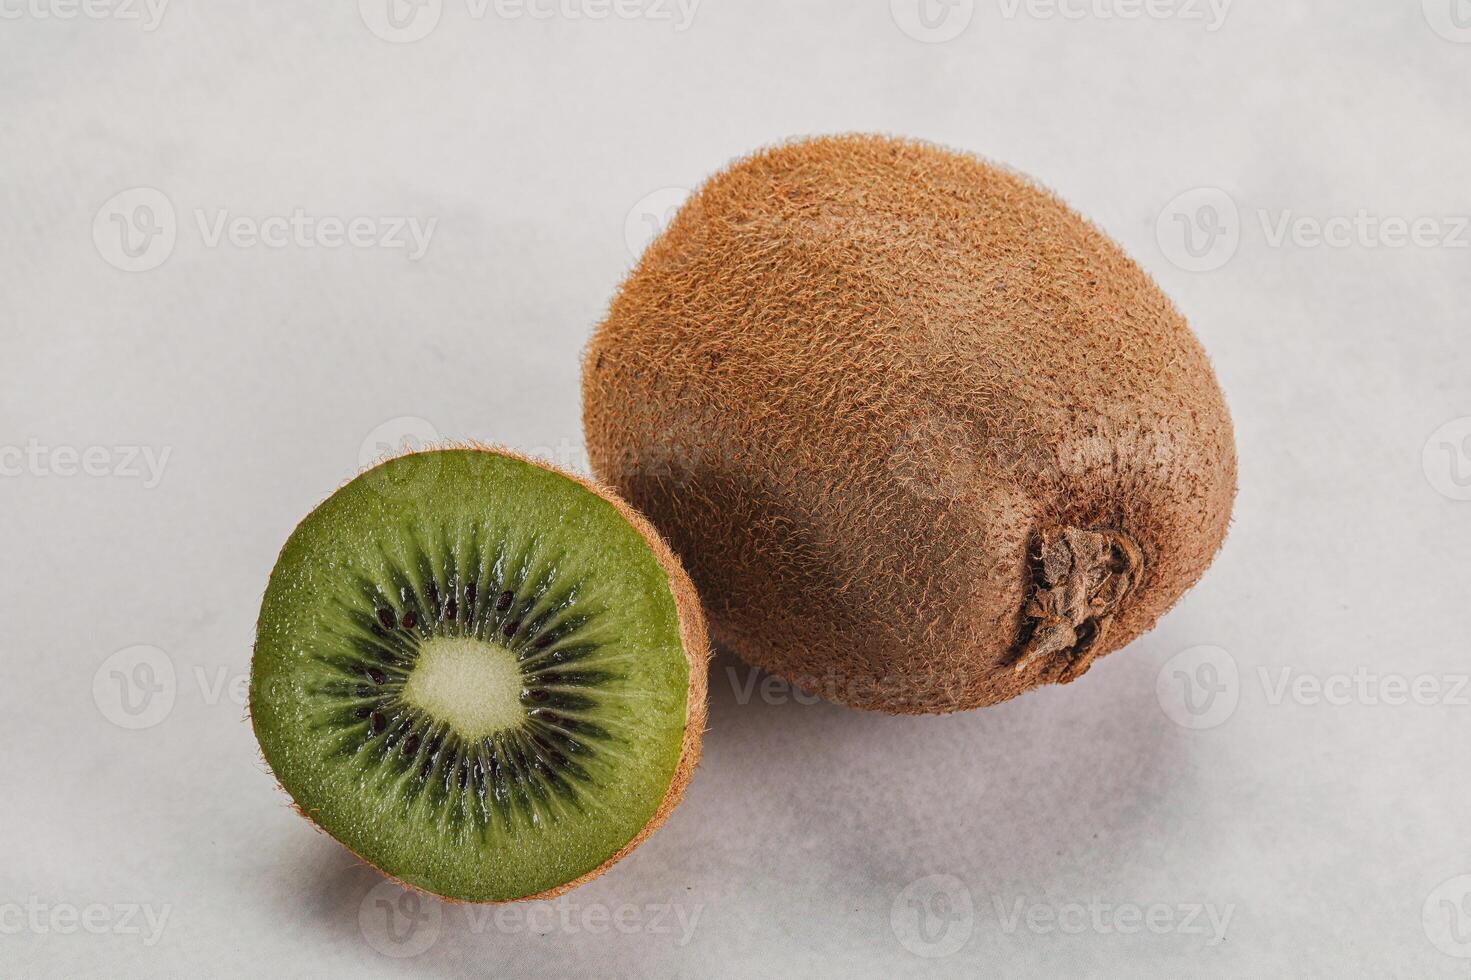 doce e suculento kiwi fruta foto